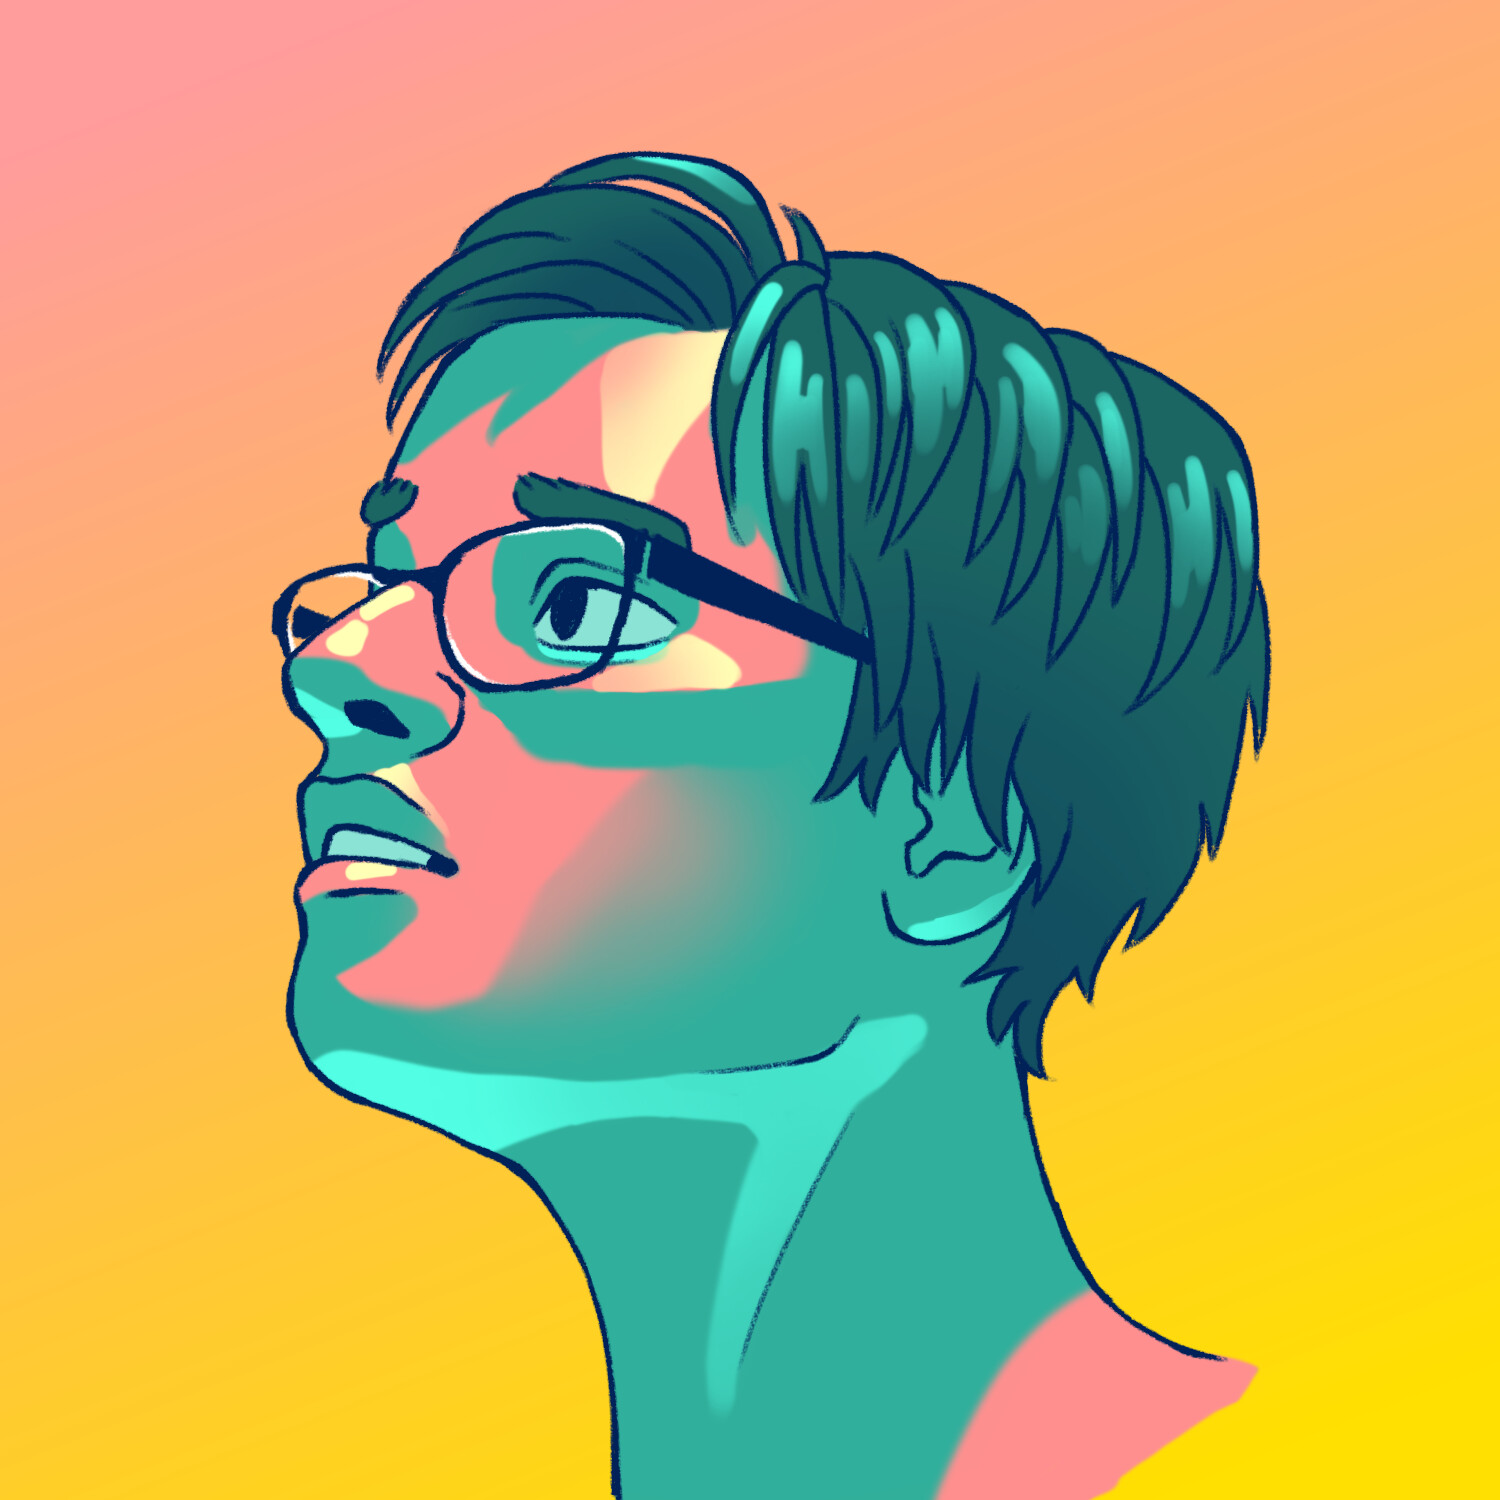 ArtStation - Funky-colored self portrait